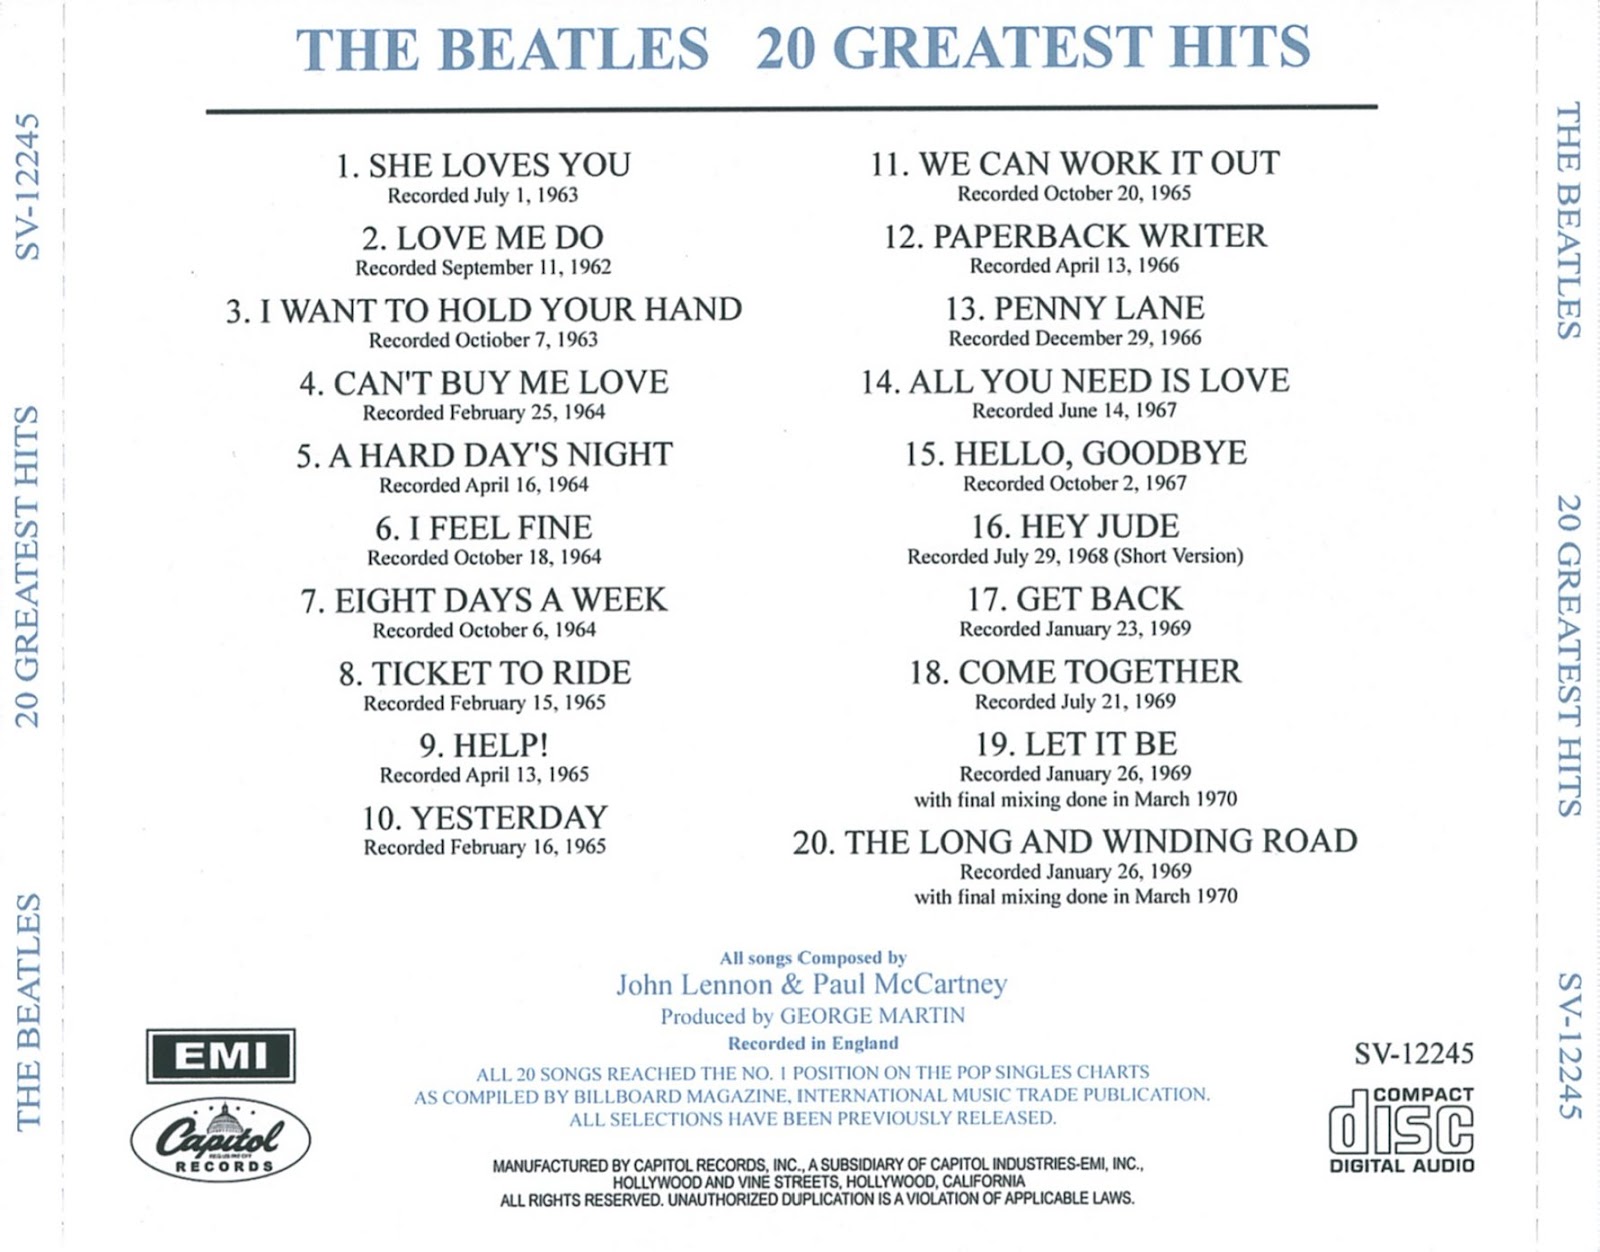 The beatles перевод песен. Битлз 20 Greatest альбом. The Beatles Greatest Hits. The Beatles 1982]. Beatles Greatest пластинка.